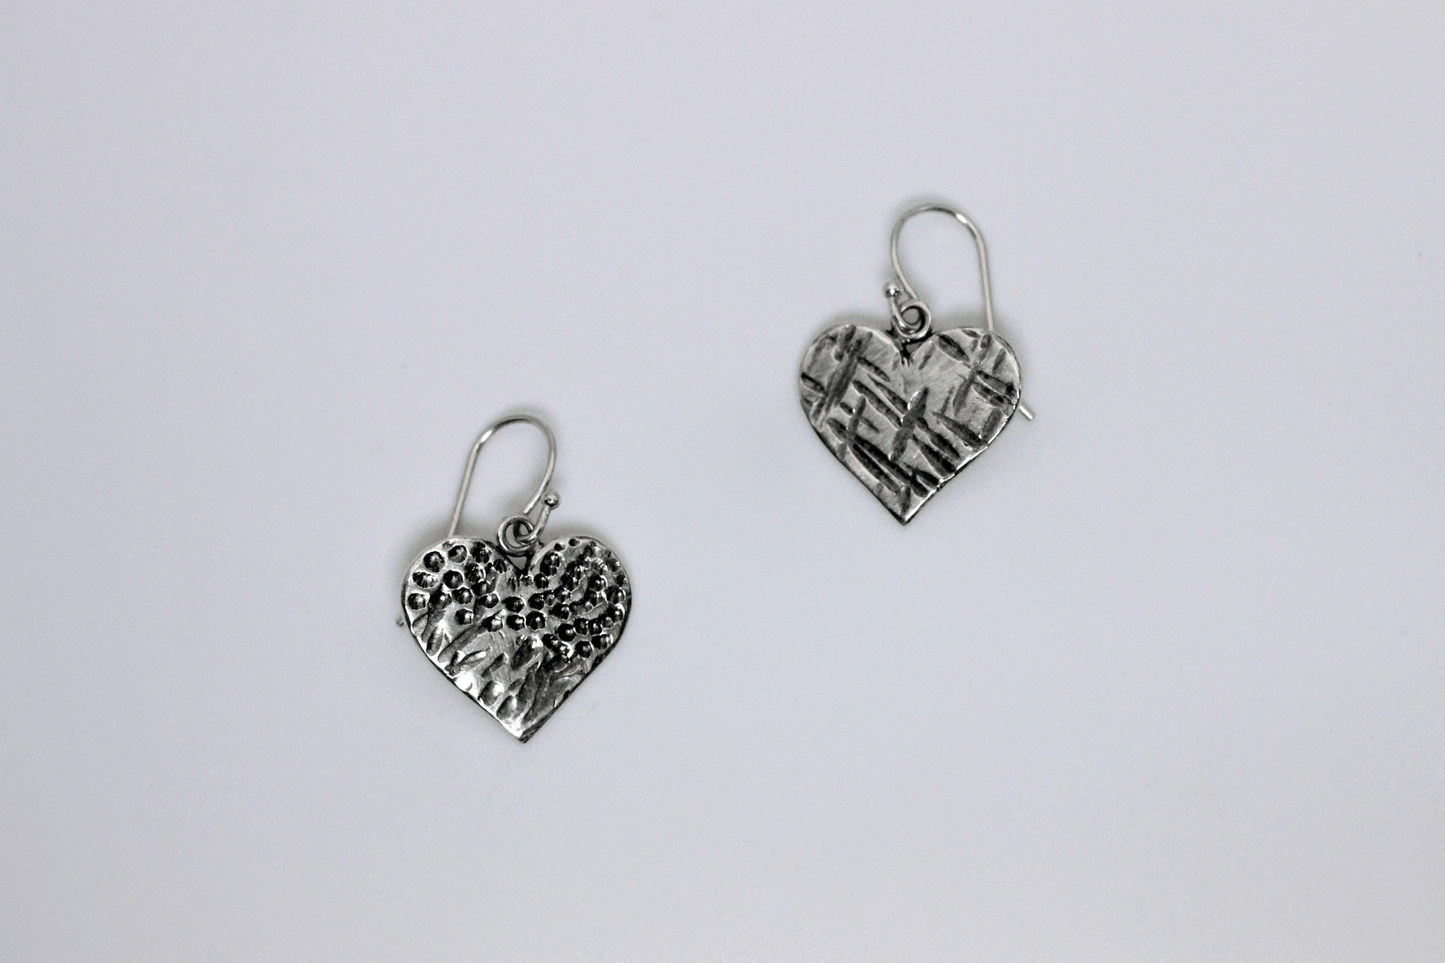 Sterling Silver Petite Heart Earrings ~ Handcrafted Jewelry ~ VANDA inspired